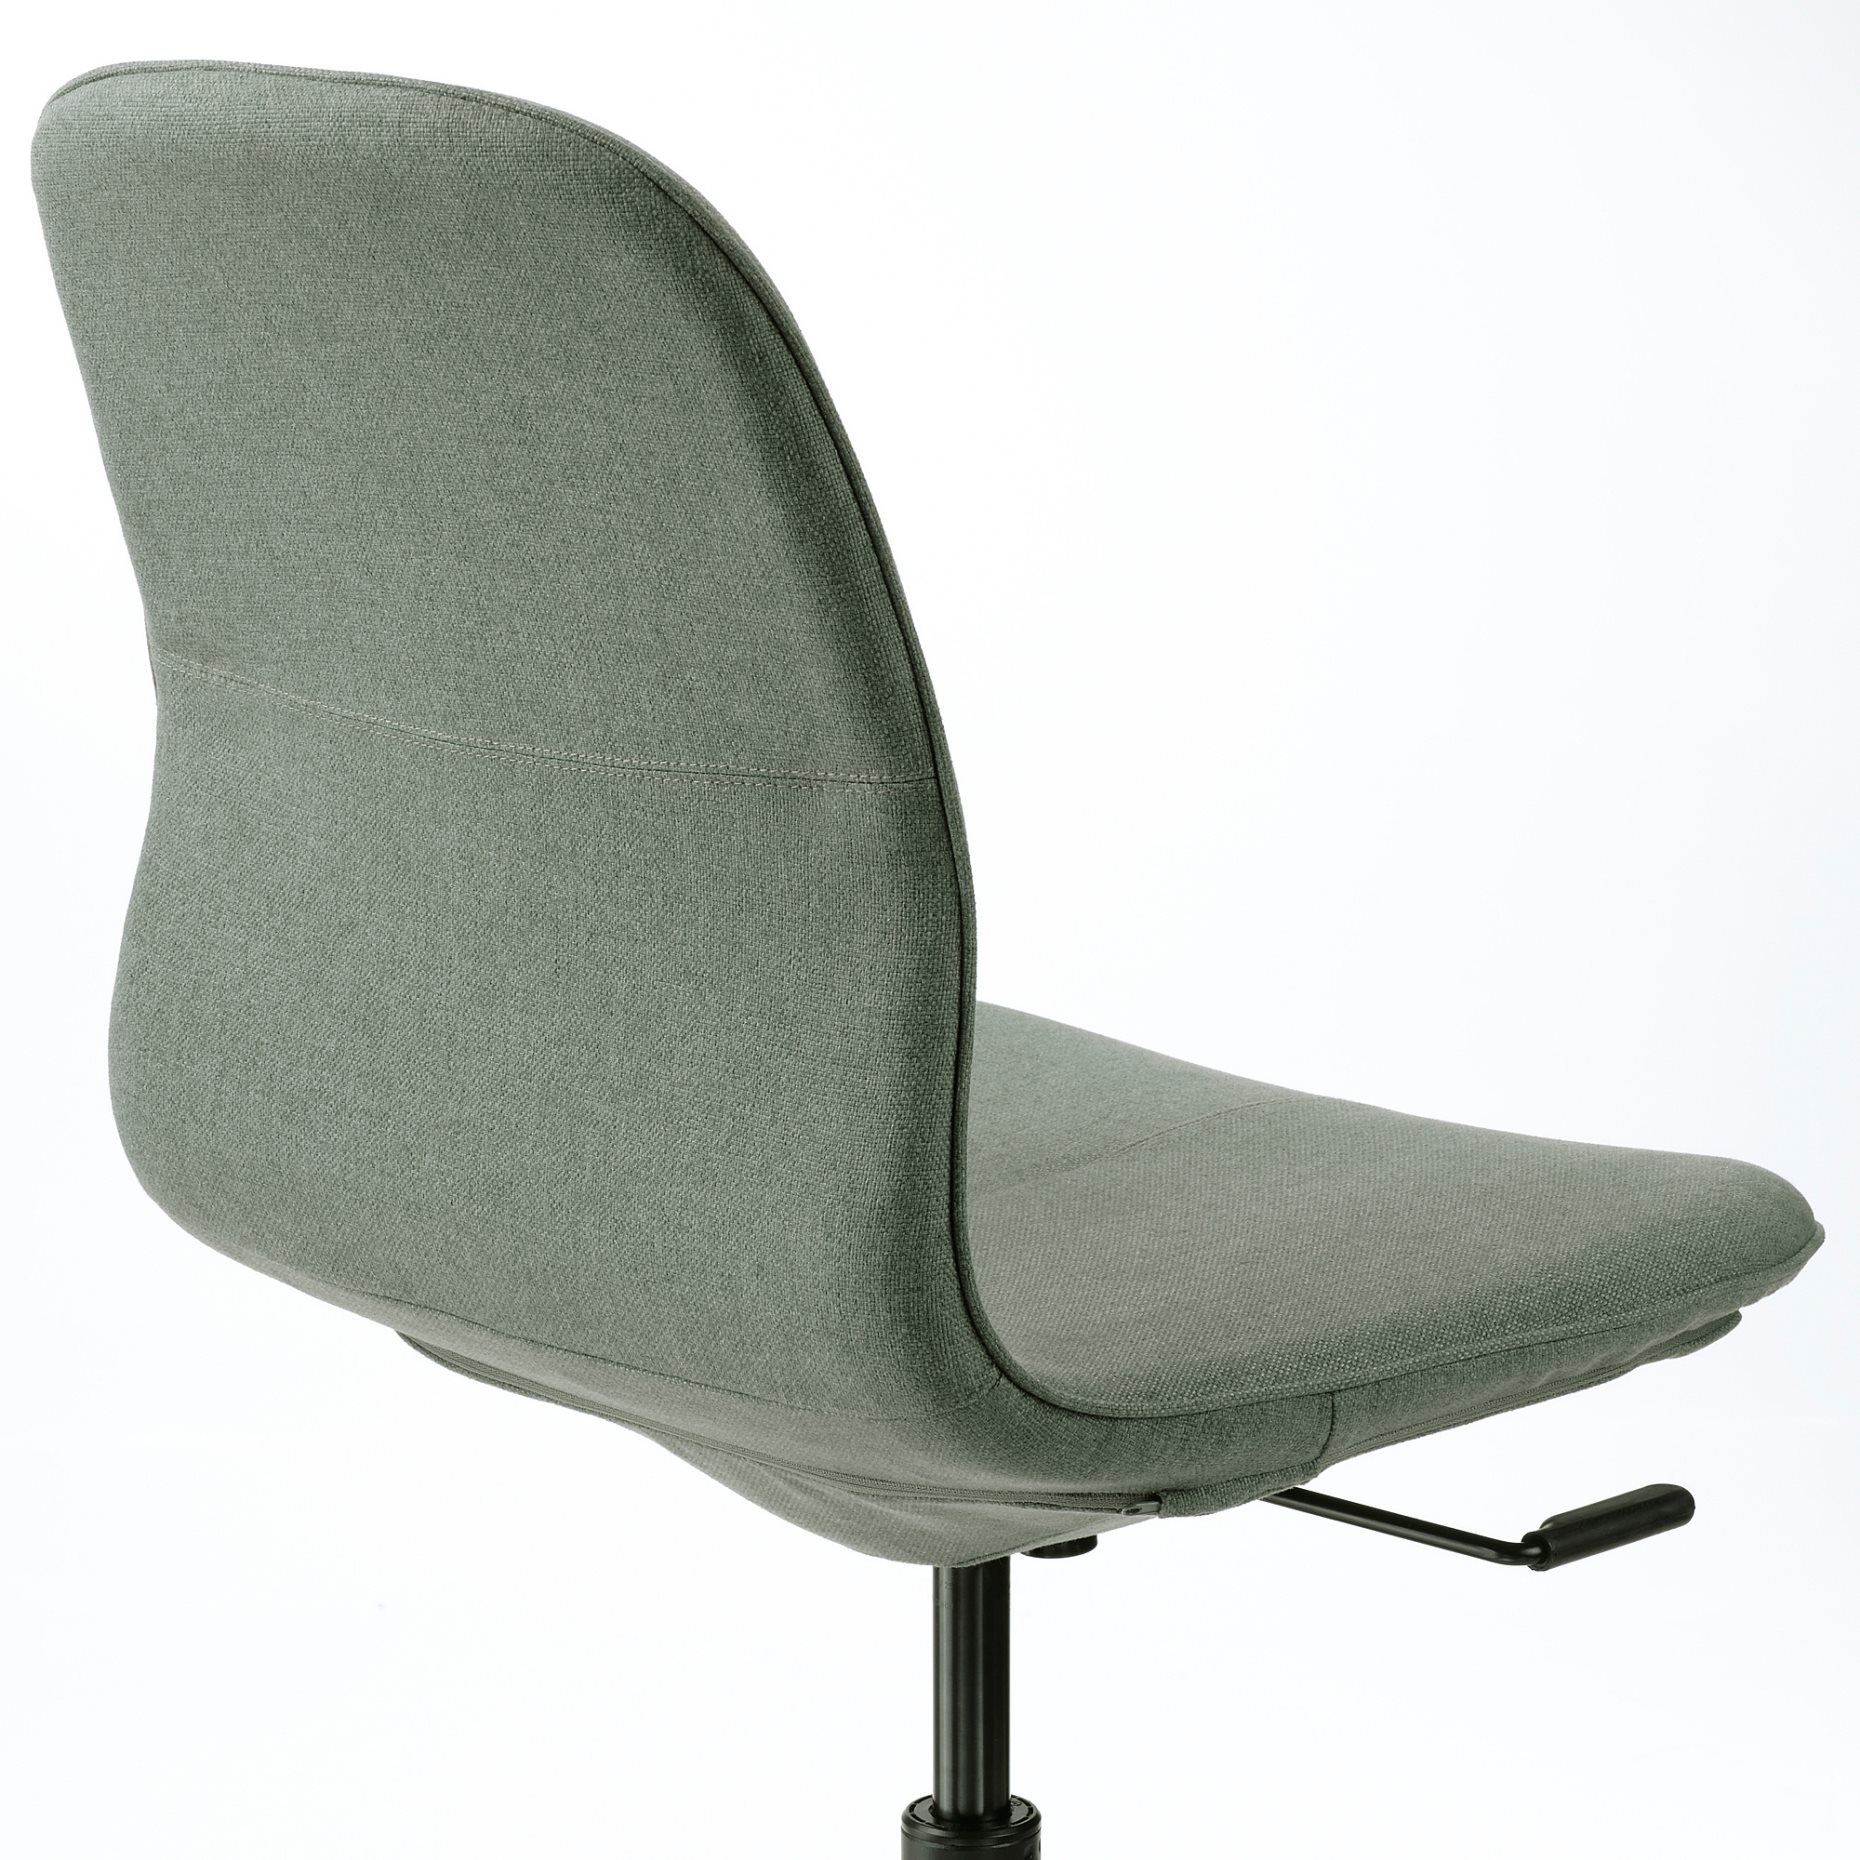 LÅNGFJÄLL, swivel chair, 295.060.56